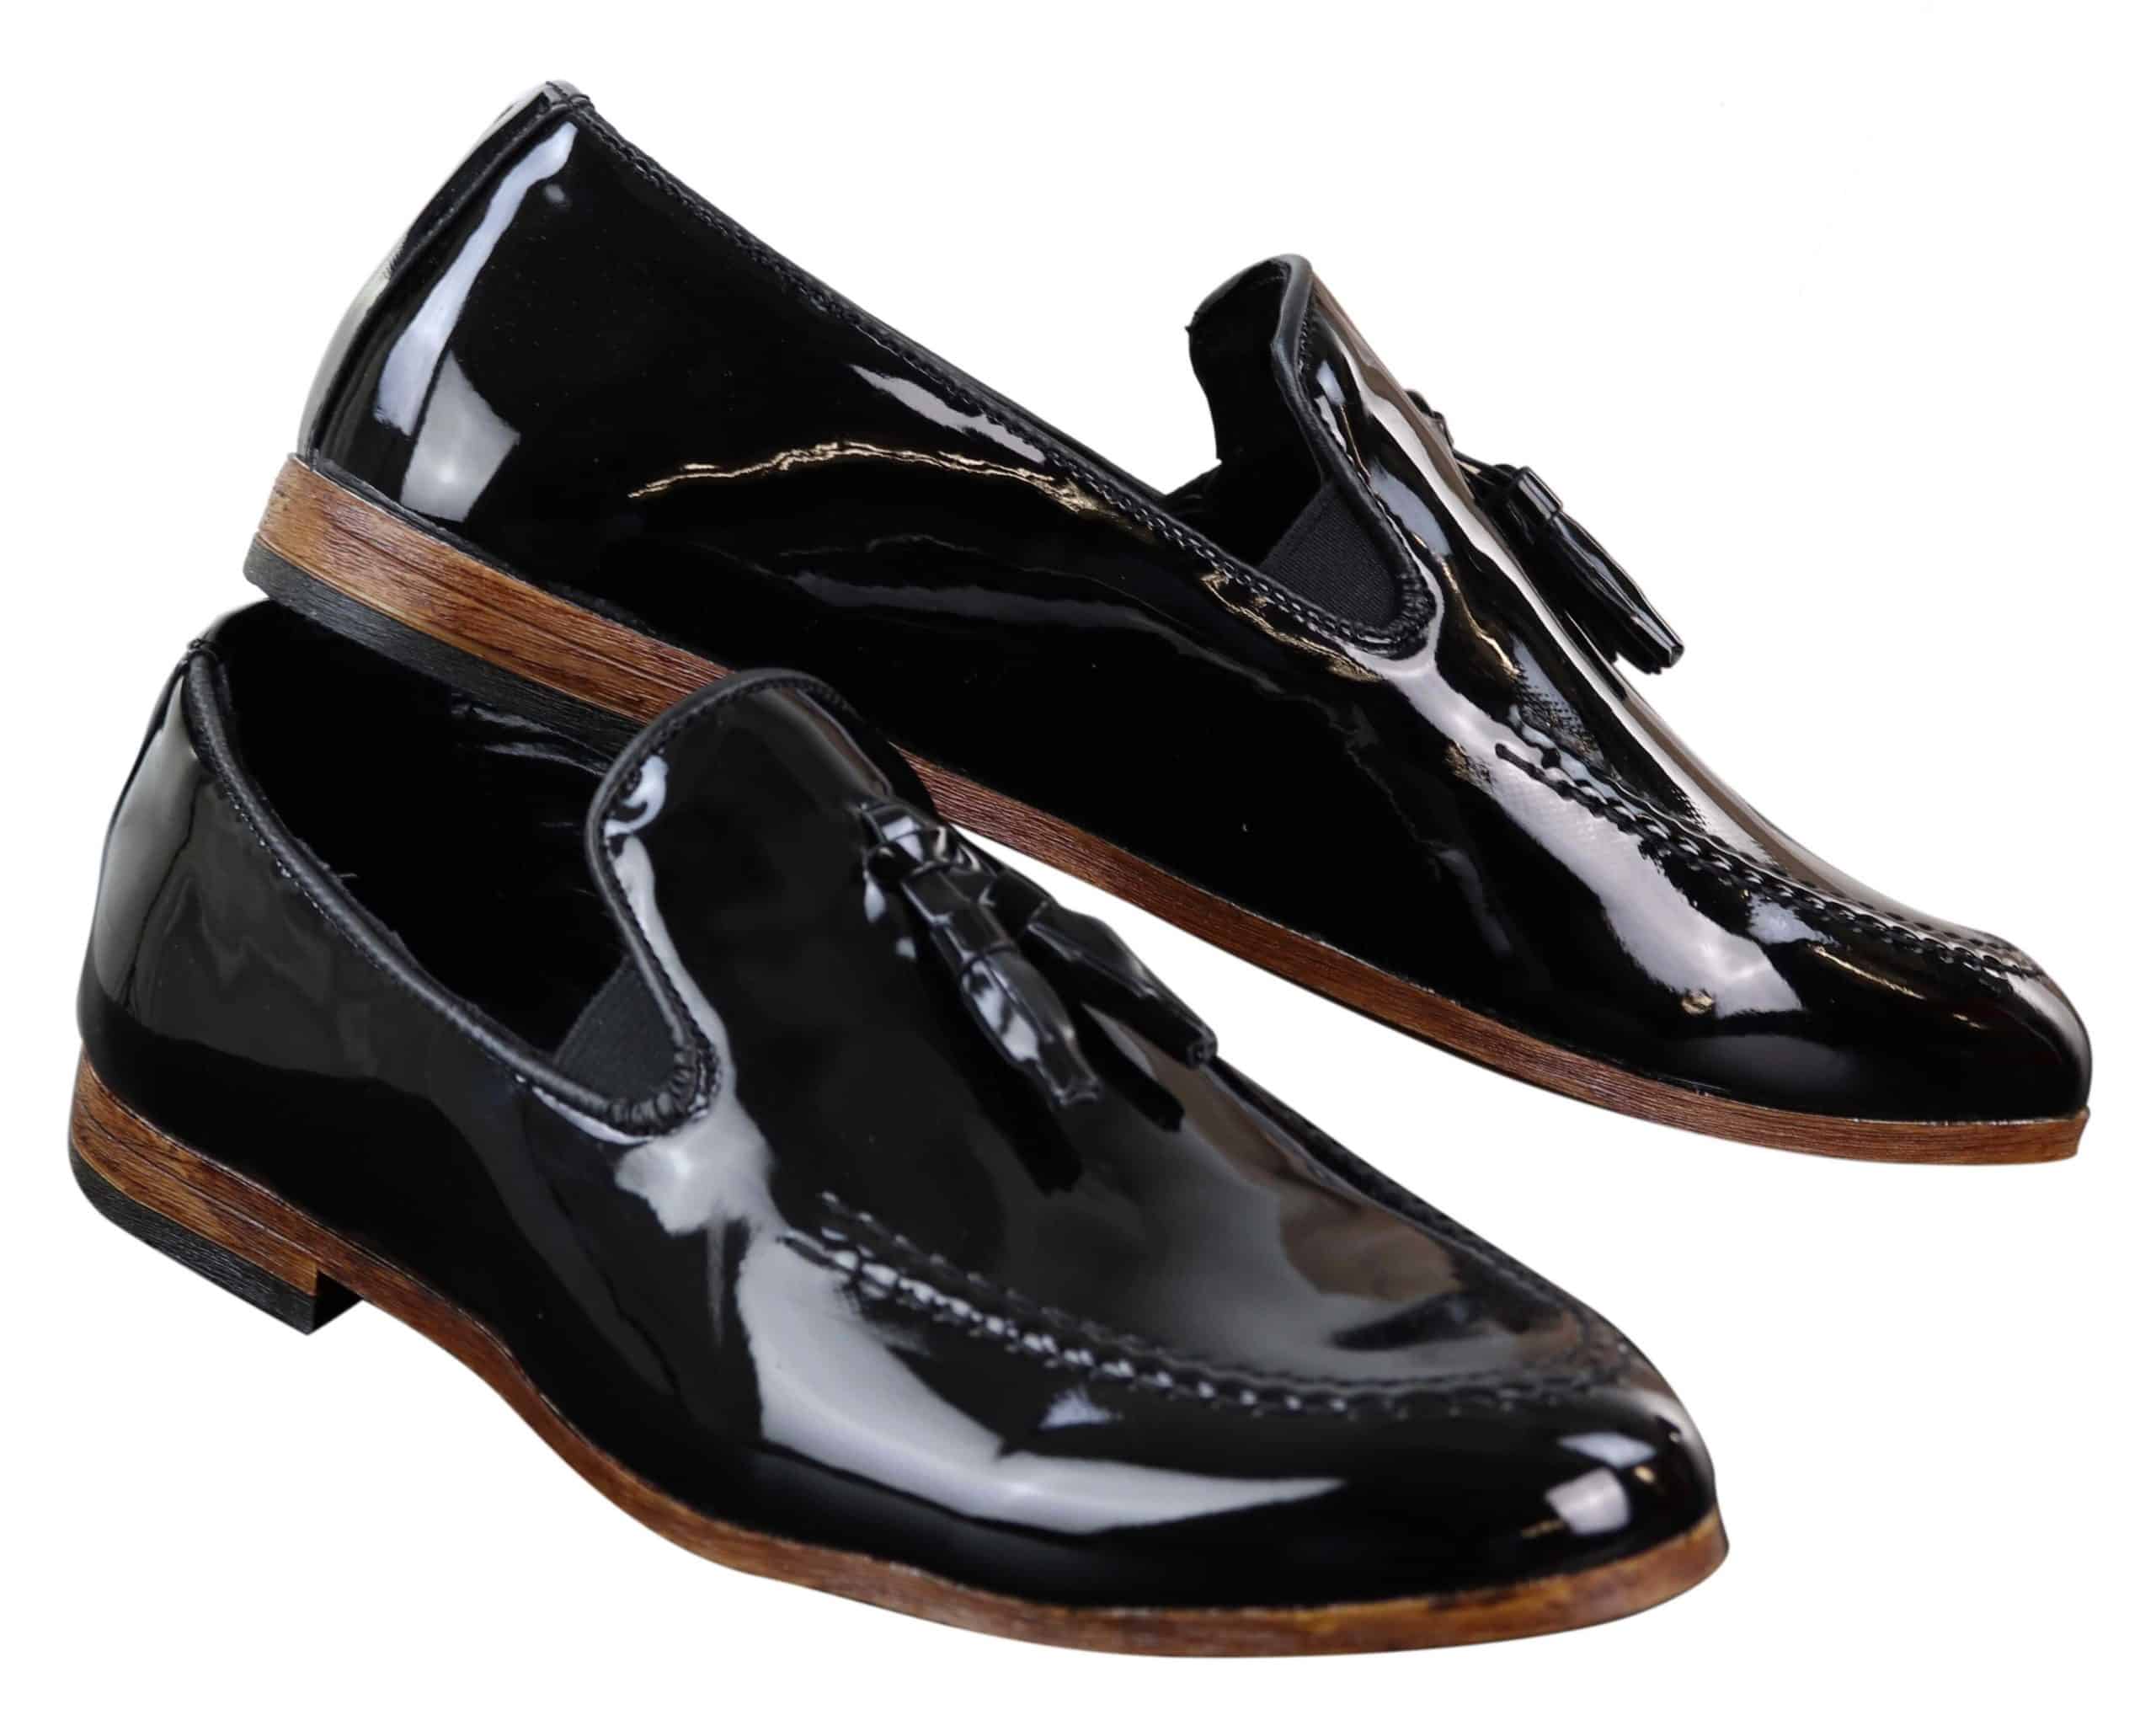 Mens Patent Black Tassel Shoes: Buy Online - Happy Gentleman